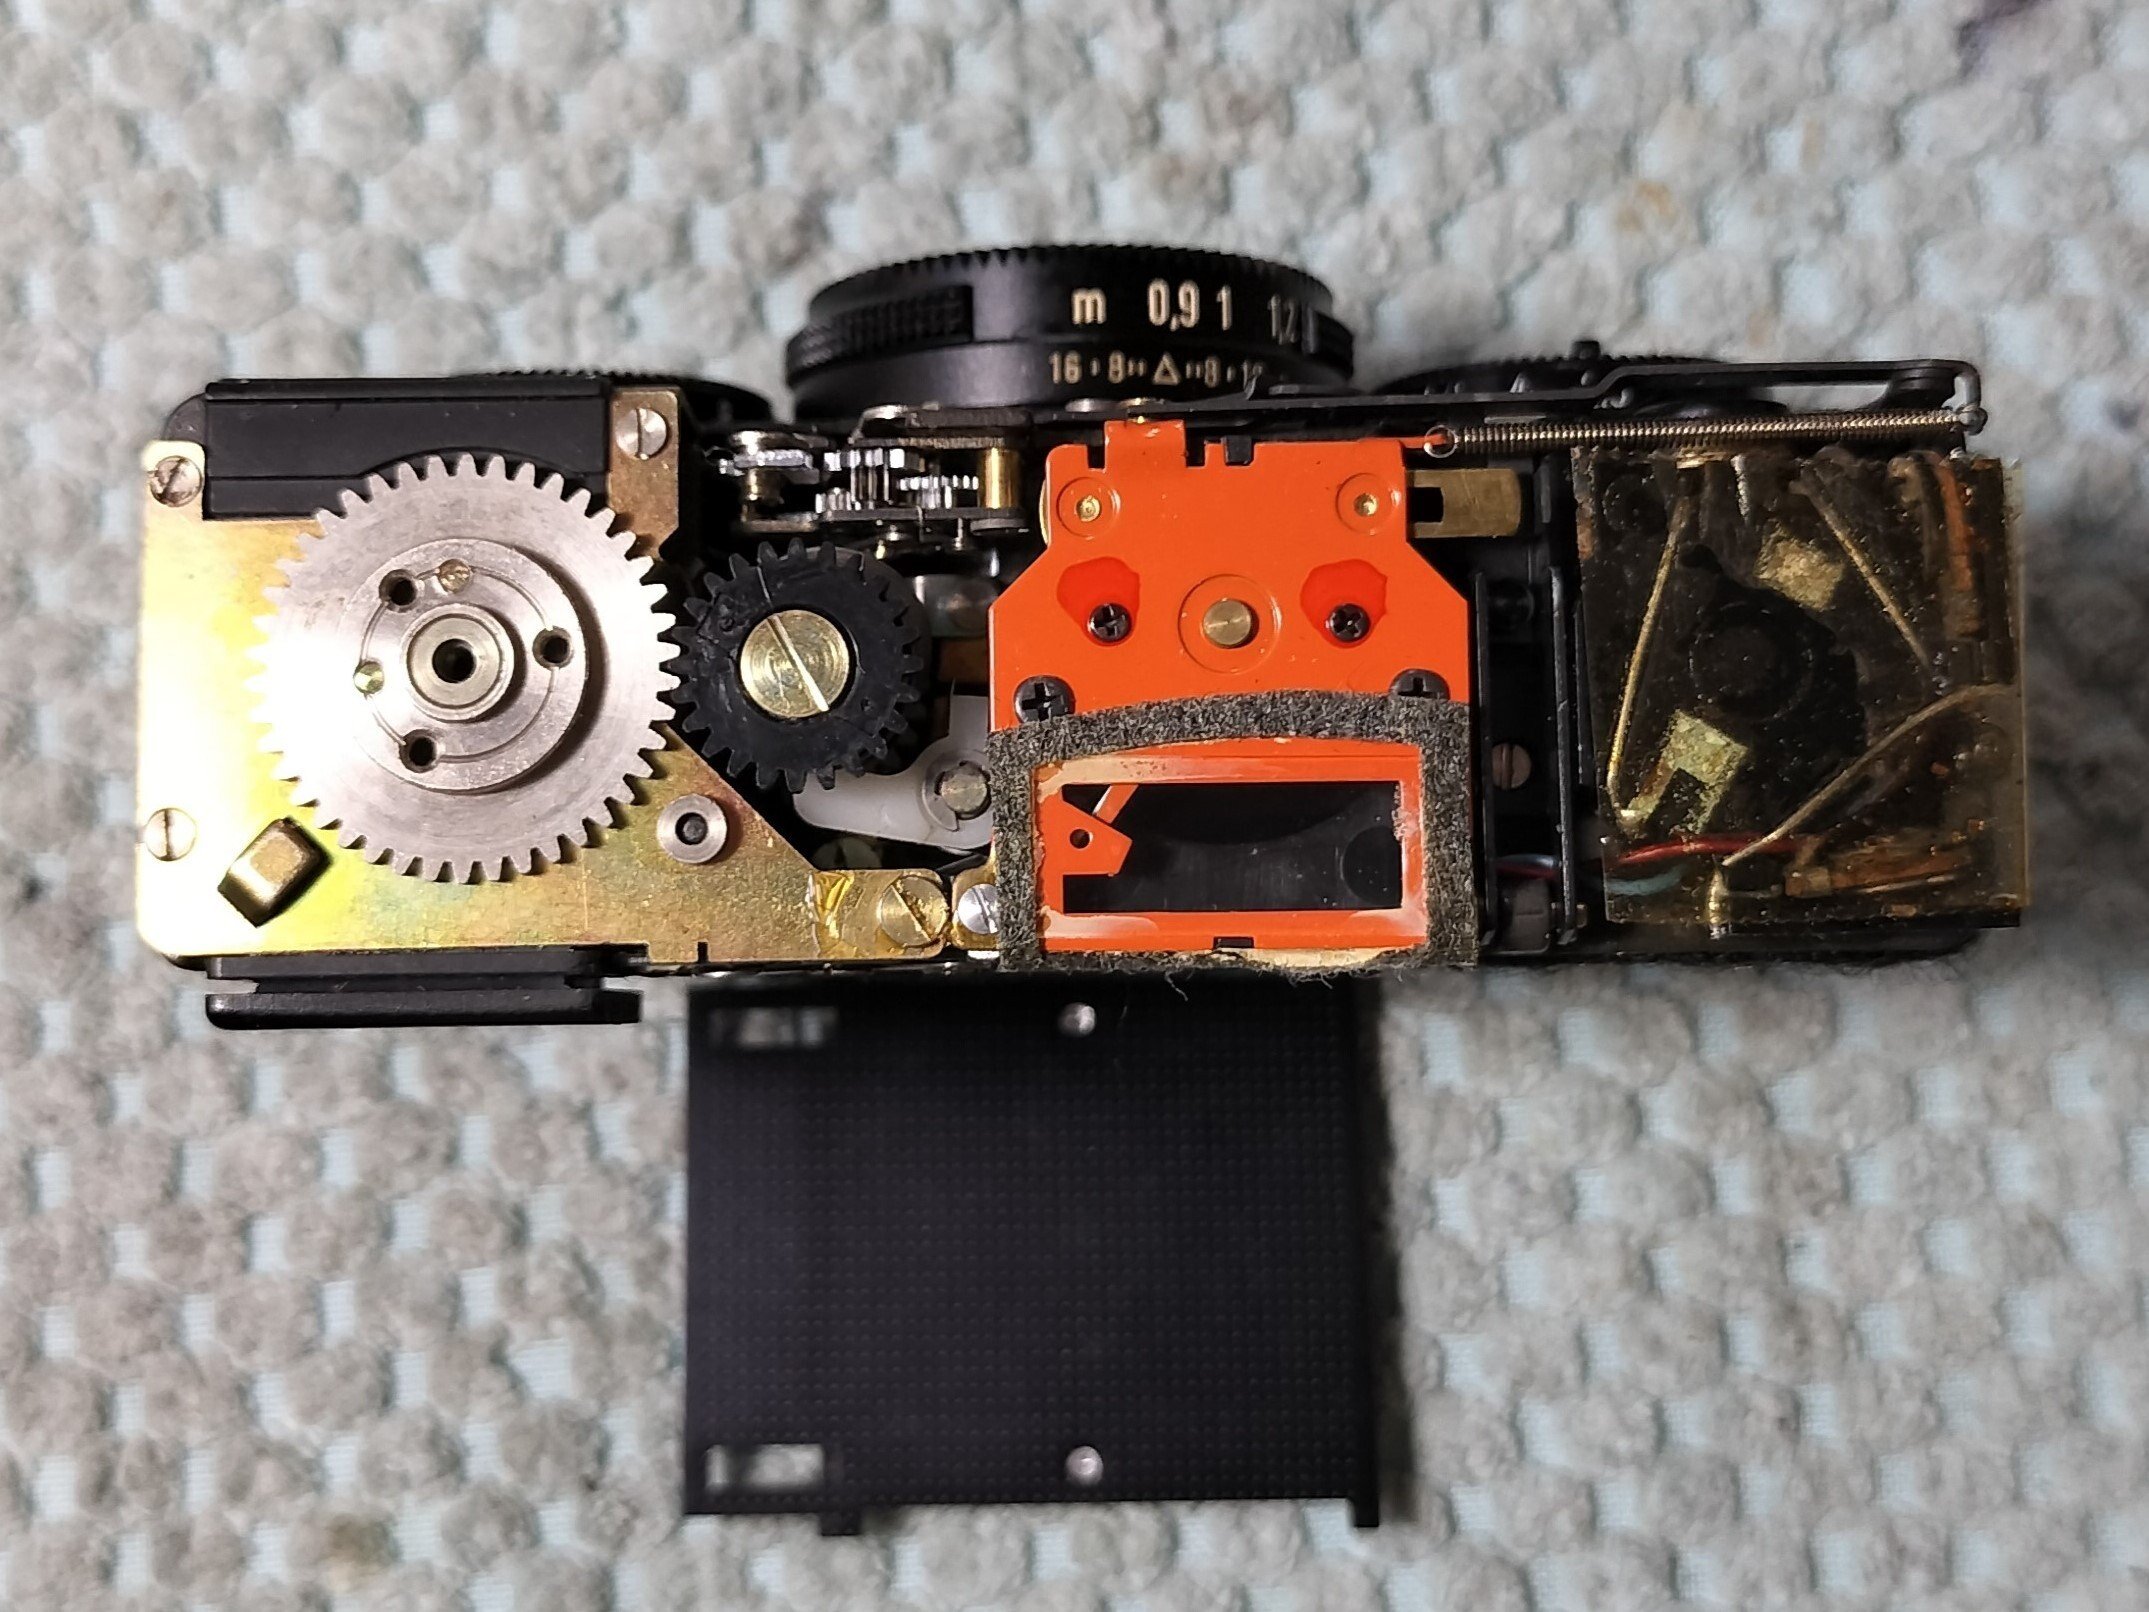 Rollei 35の露出計改善｜フィルムカメラ修理のアクアカメラ